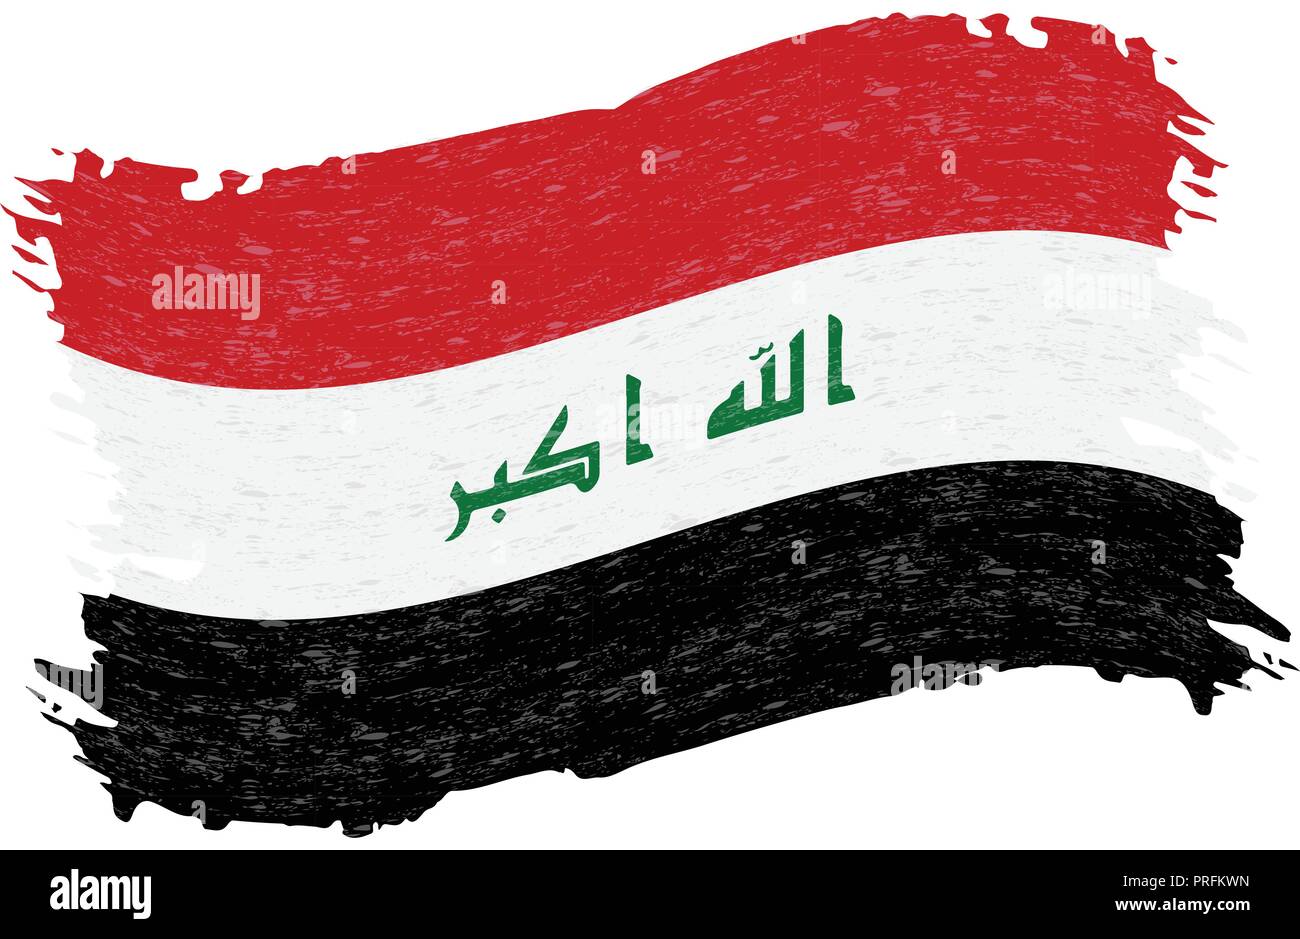 Irakische Flagge schwenken - Stockfotografie: lizenzfreie Fotos